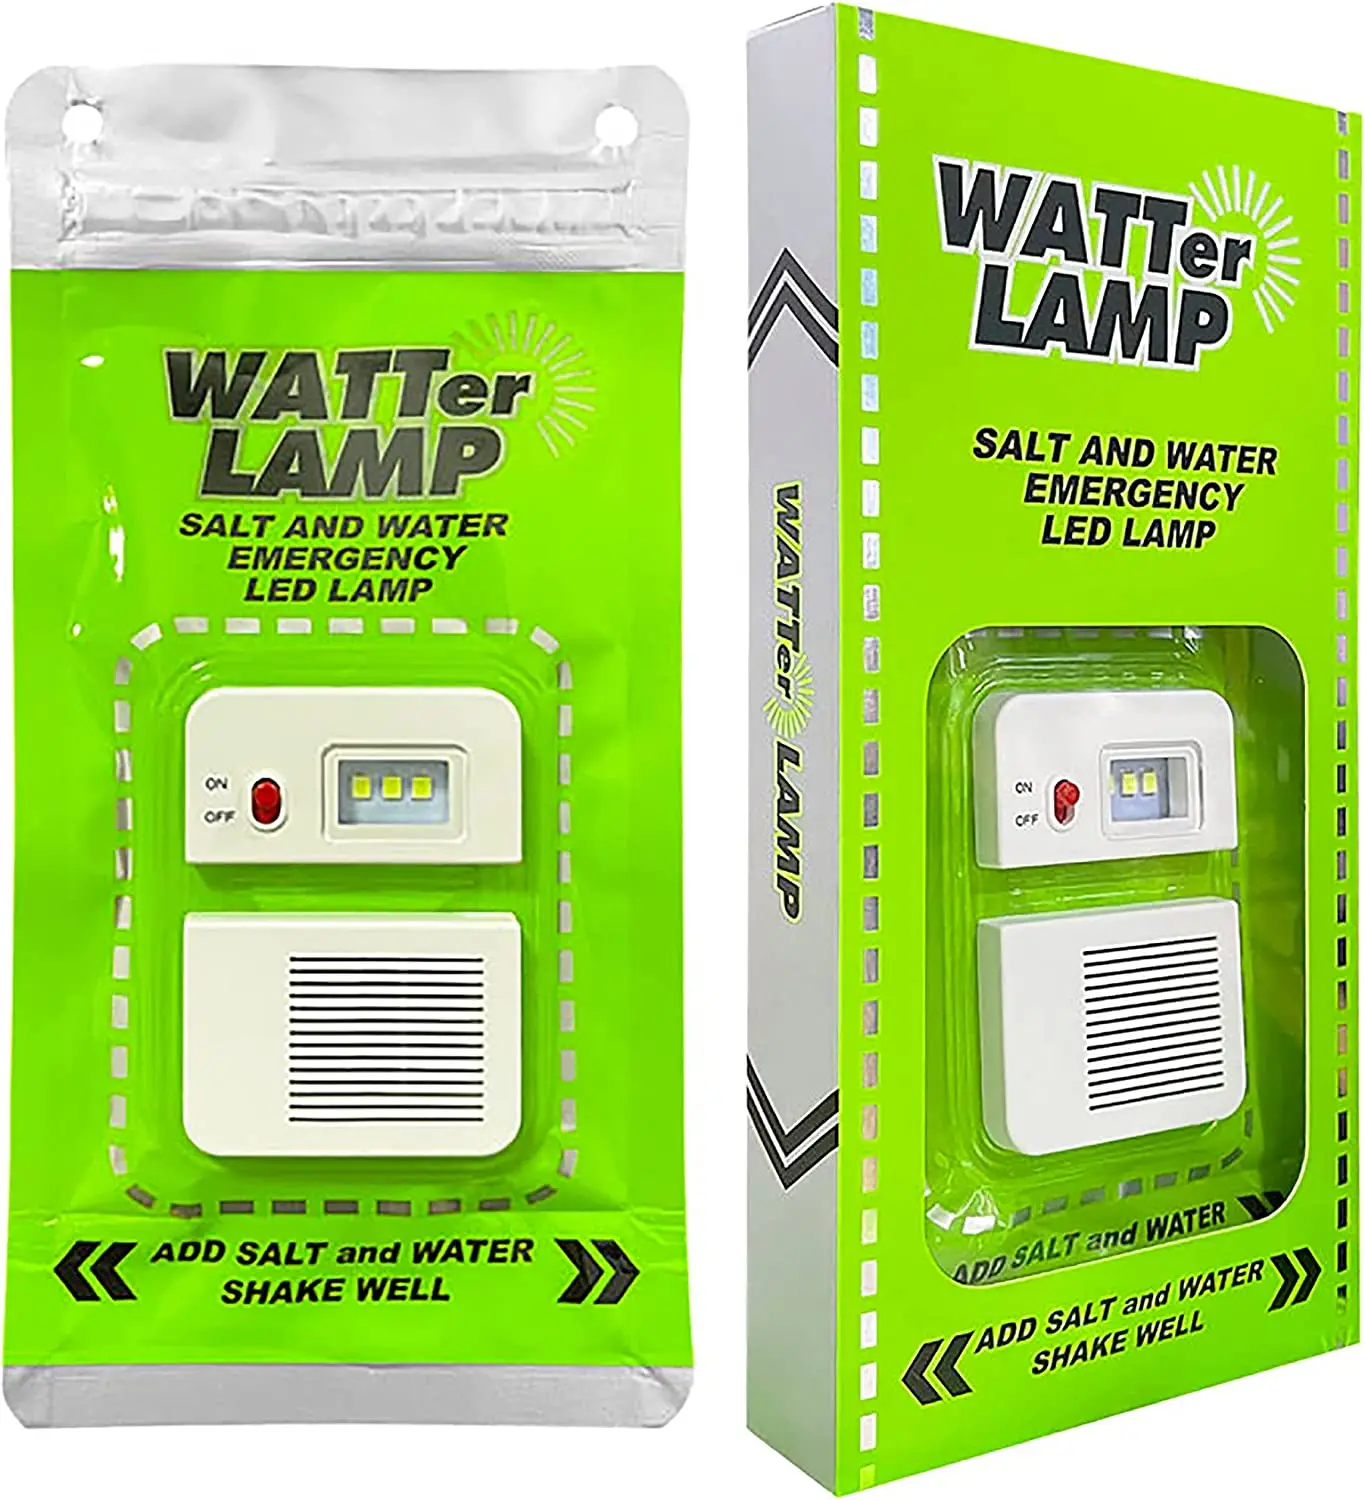 Latest Waterproof Outdoor Emergency Night Brine LED light Camping Lantern Salt Water Bag Lamp (1600877055080)